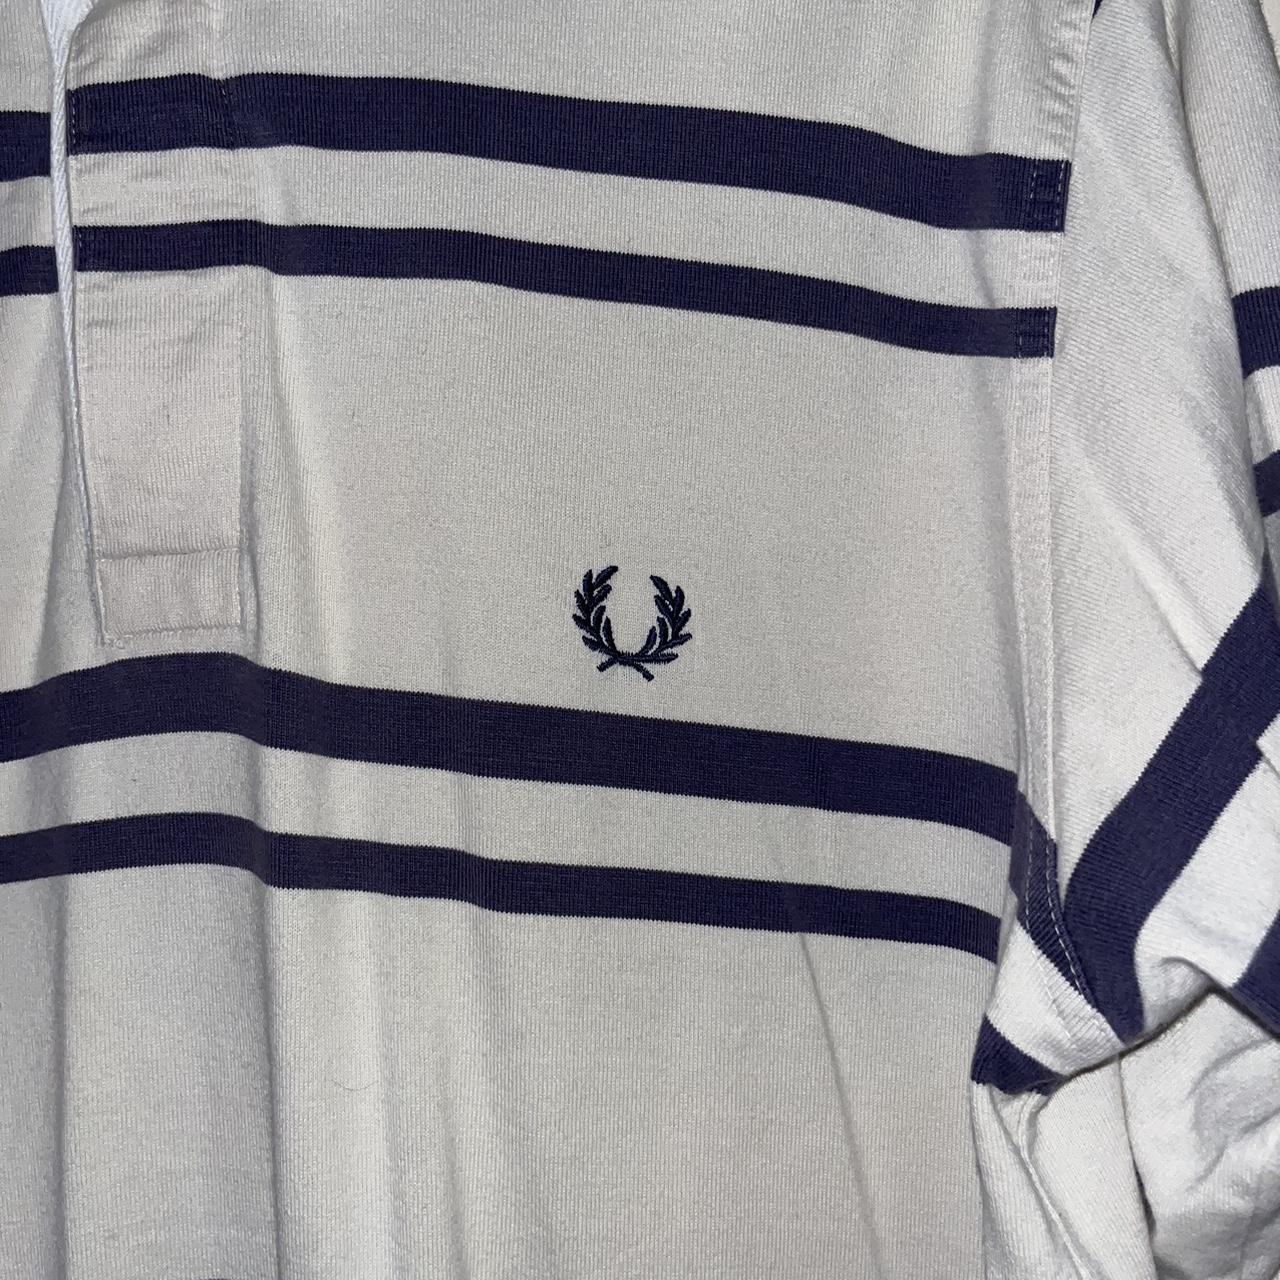 Vintage Fred Perry Rugby Shirt Medium Size Medium Depop 